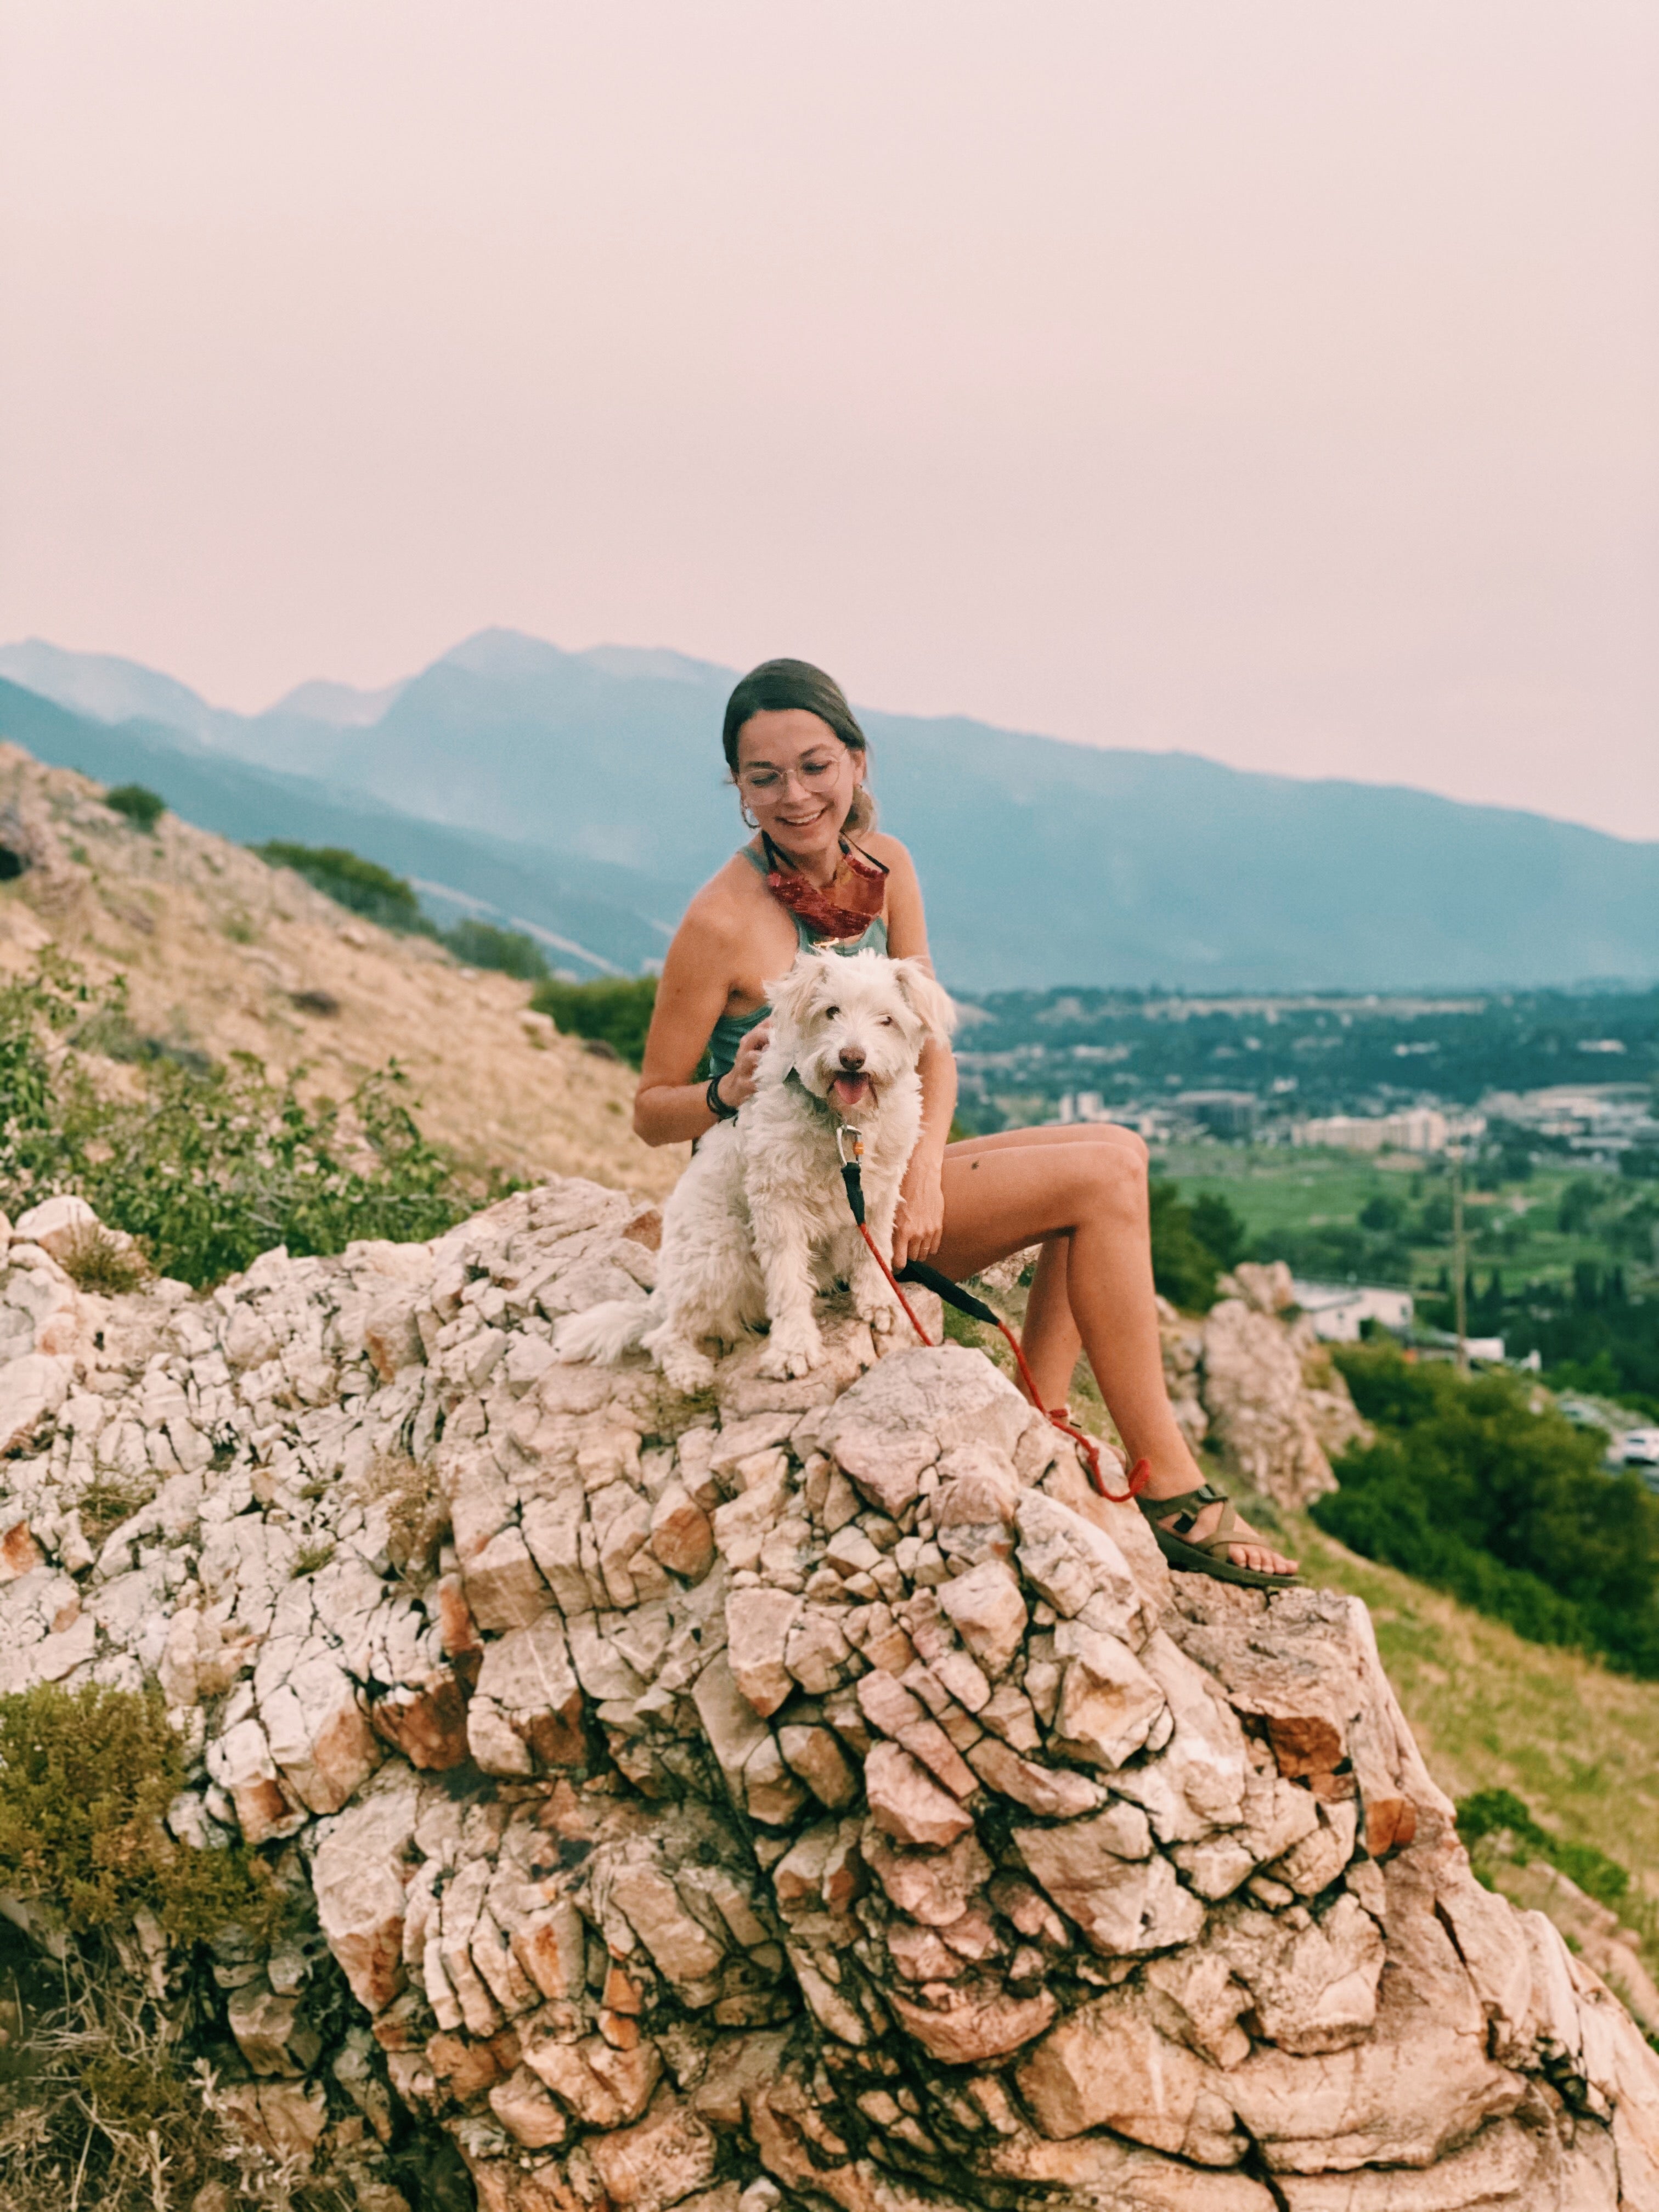 Woman and dog sitting on desert rocks